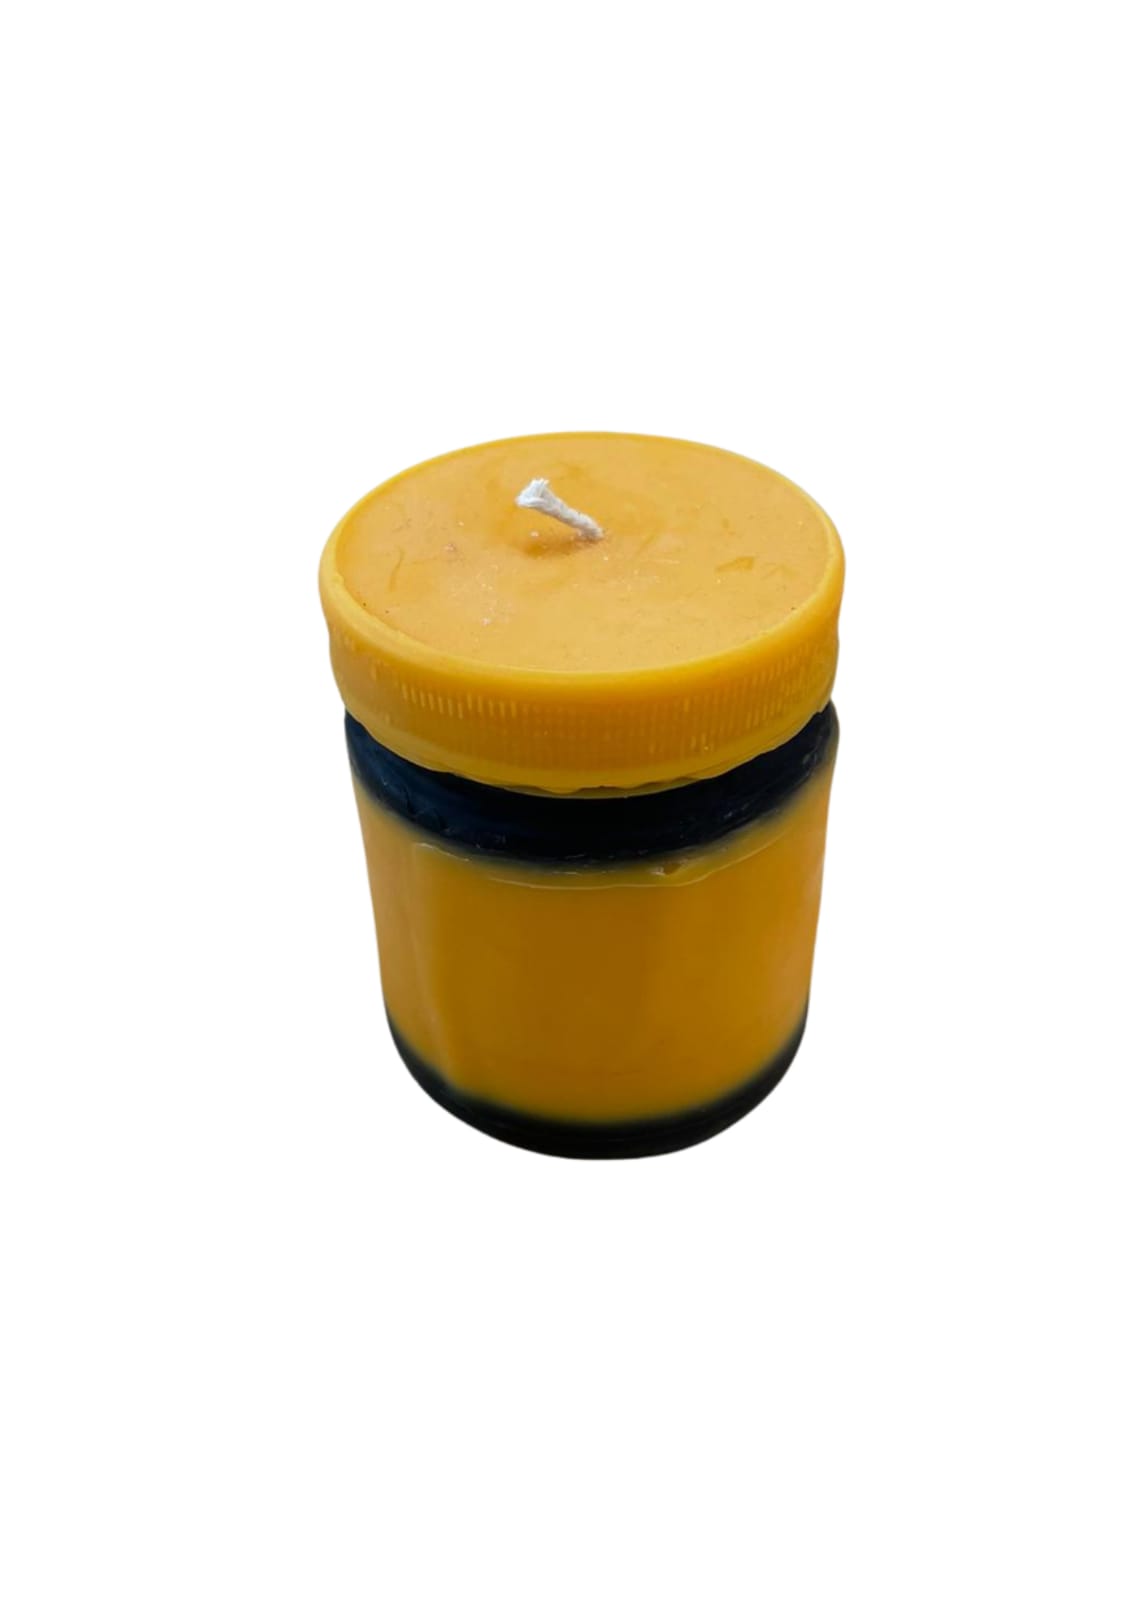 Warehouse Sale - Australian candle